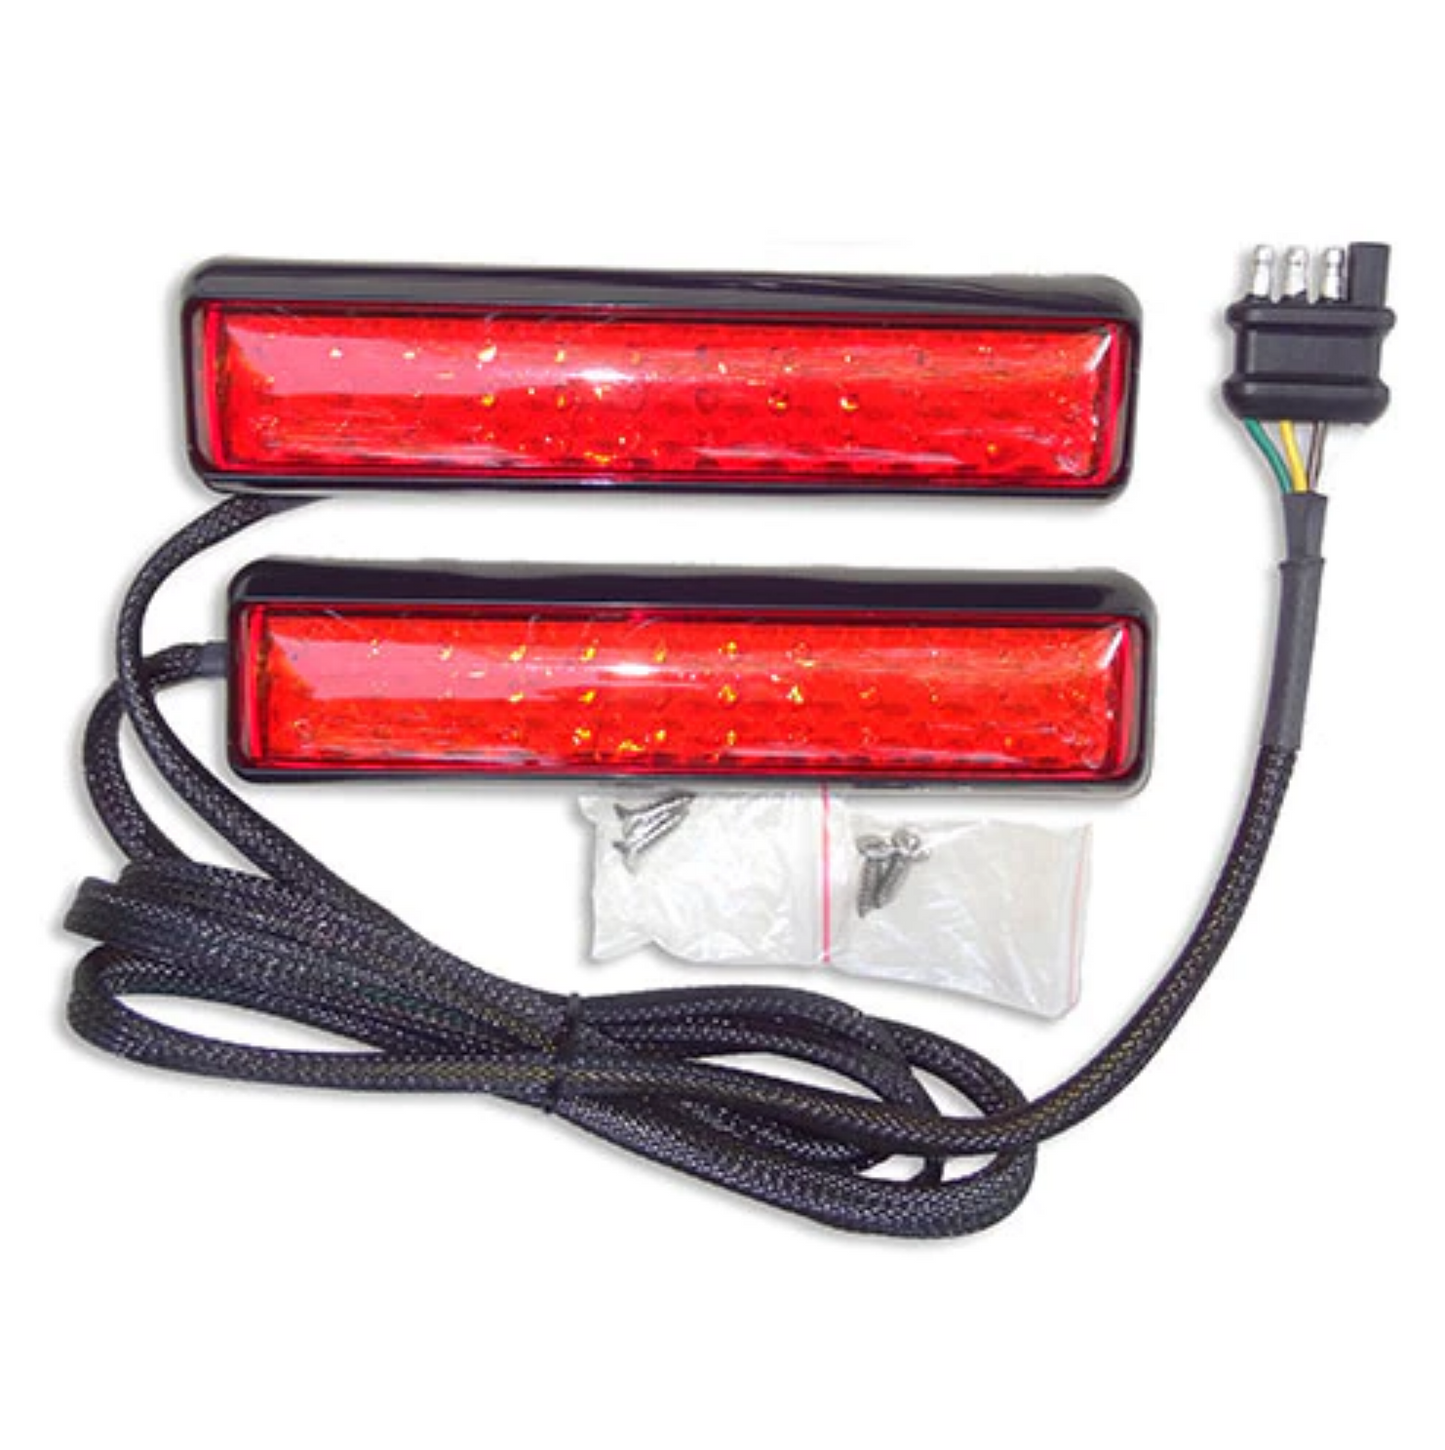 MotoTote - LED Lights - USA Carrier Tail Light Kit